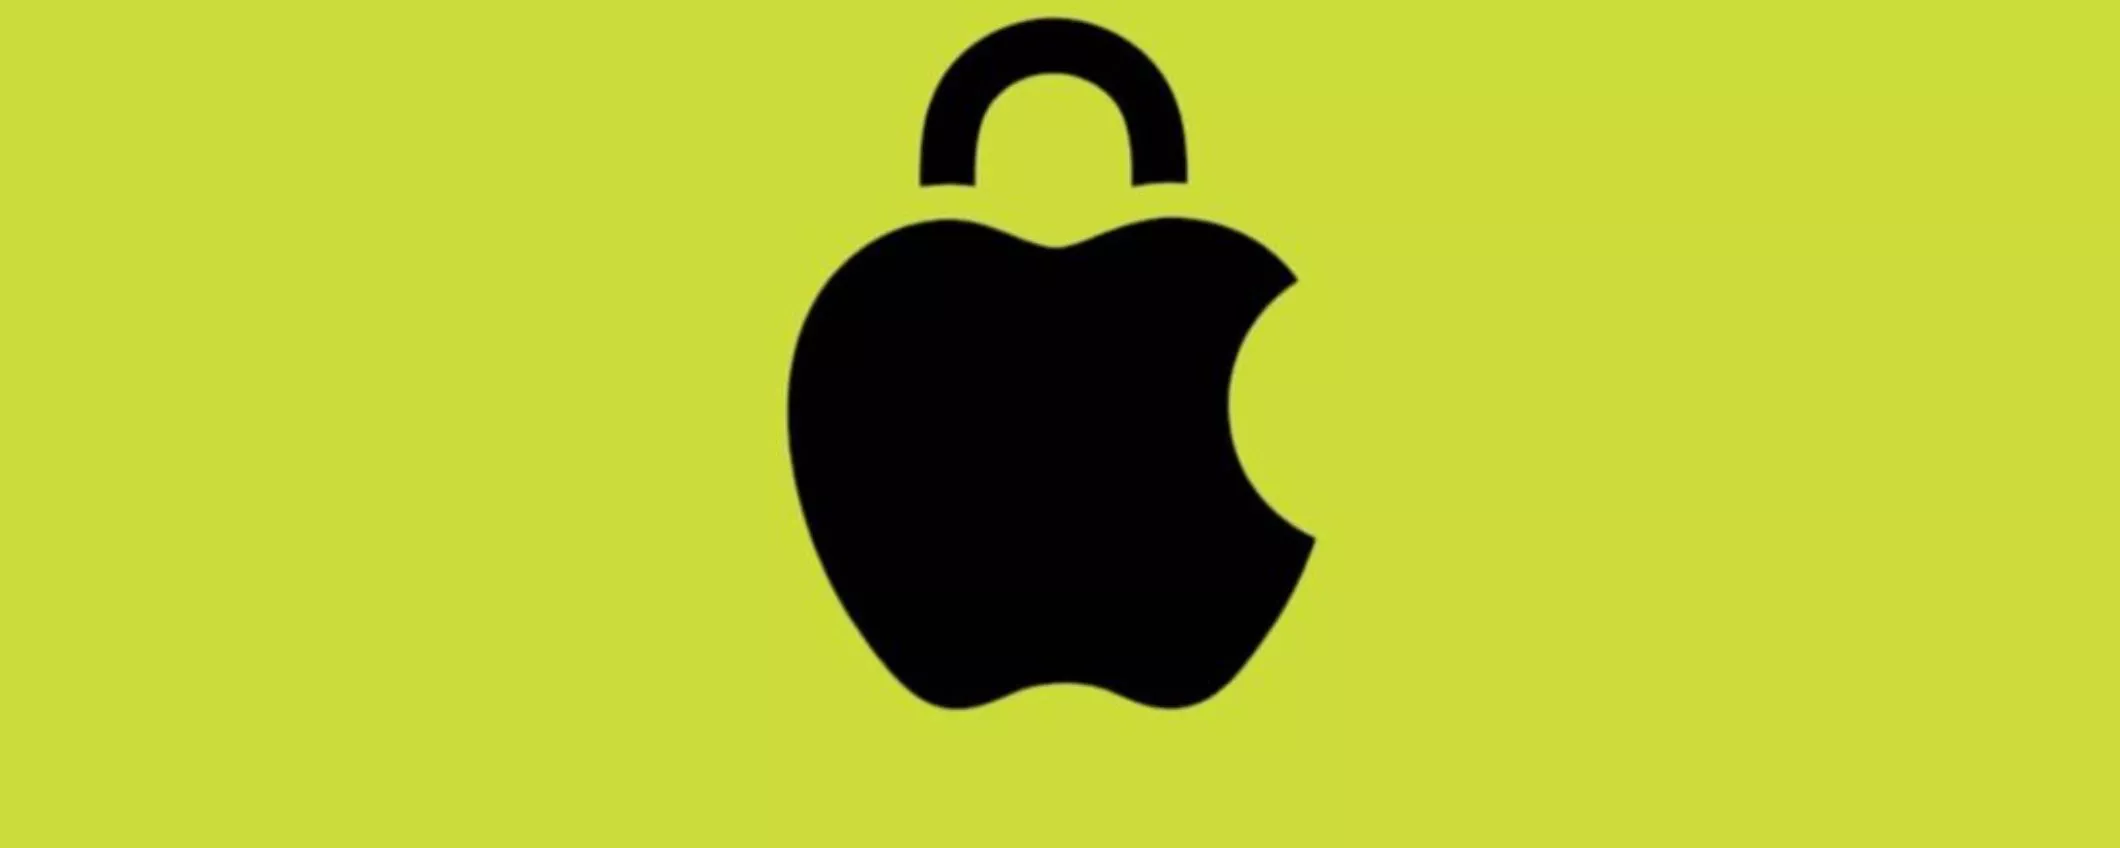 Apple: nuova app Passwords per iOS 18 e macOS 15